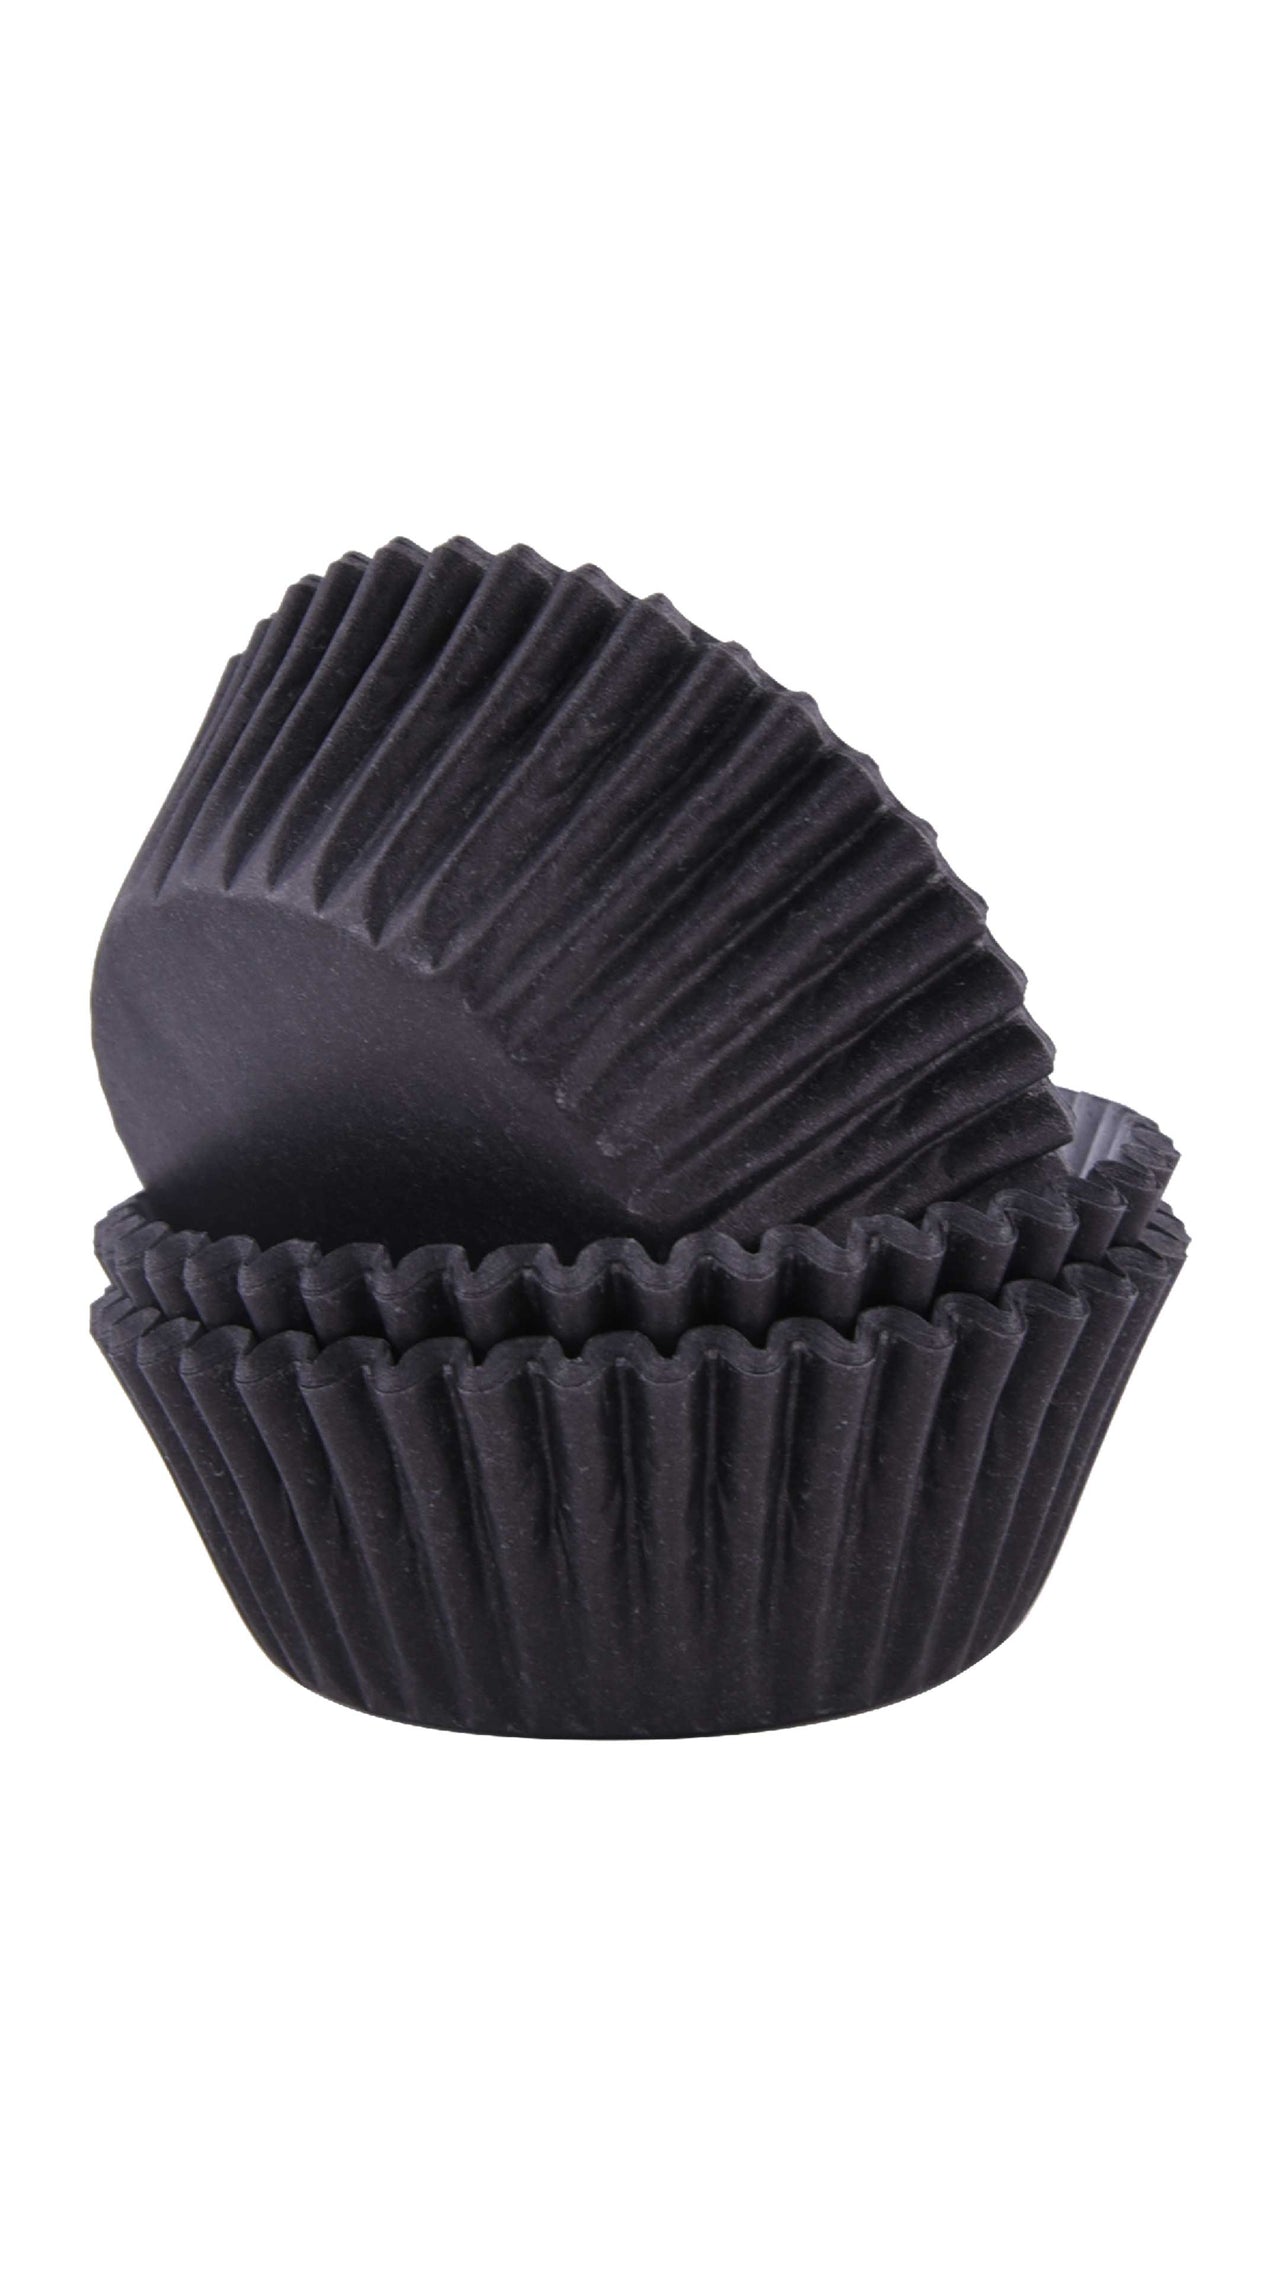 PME - Cupcake Cases - Black - 60 Pack Cupcake Cases PME